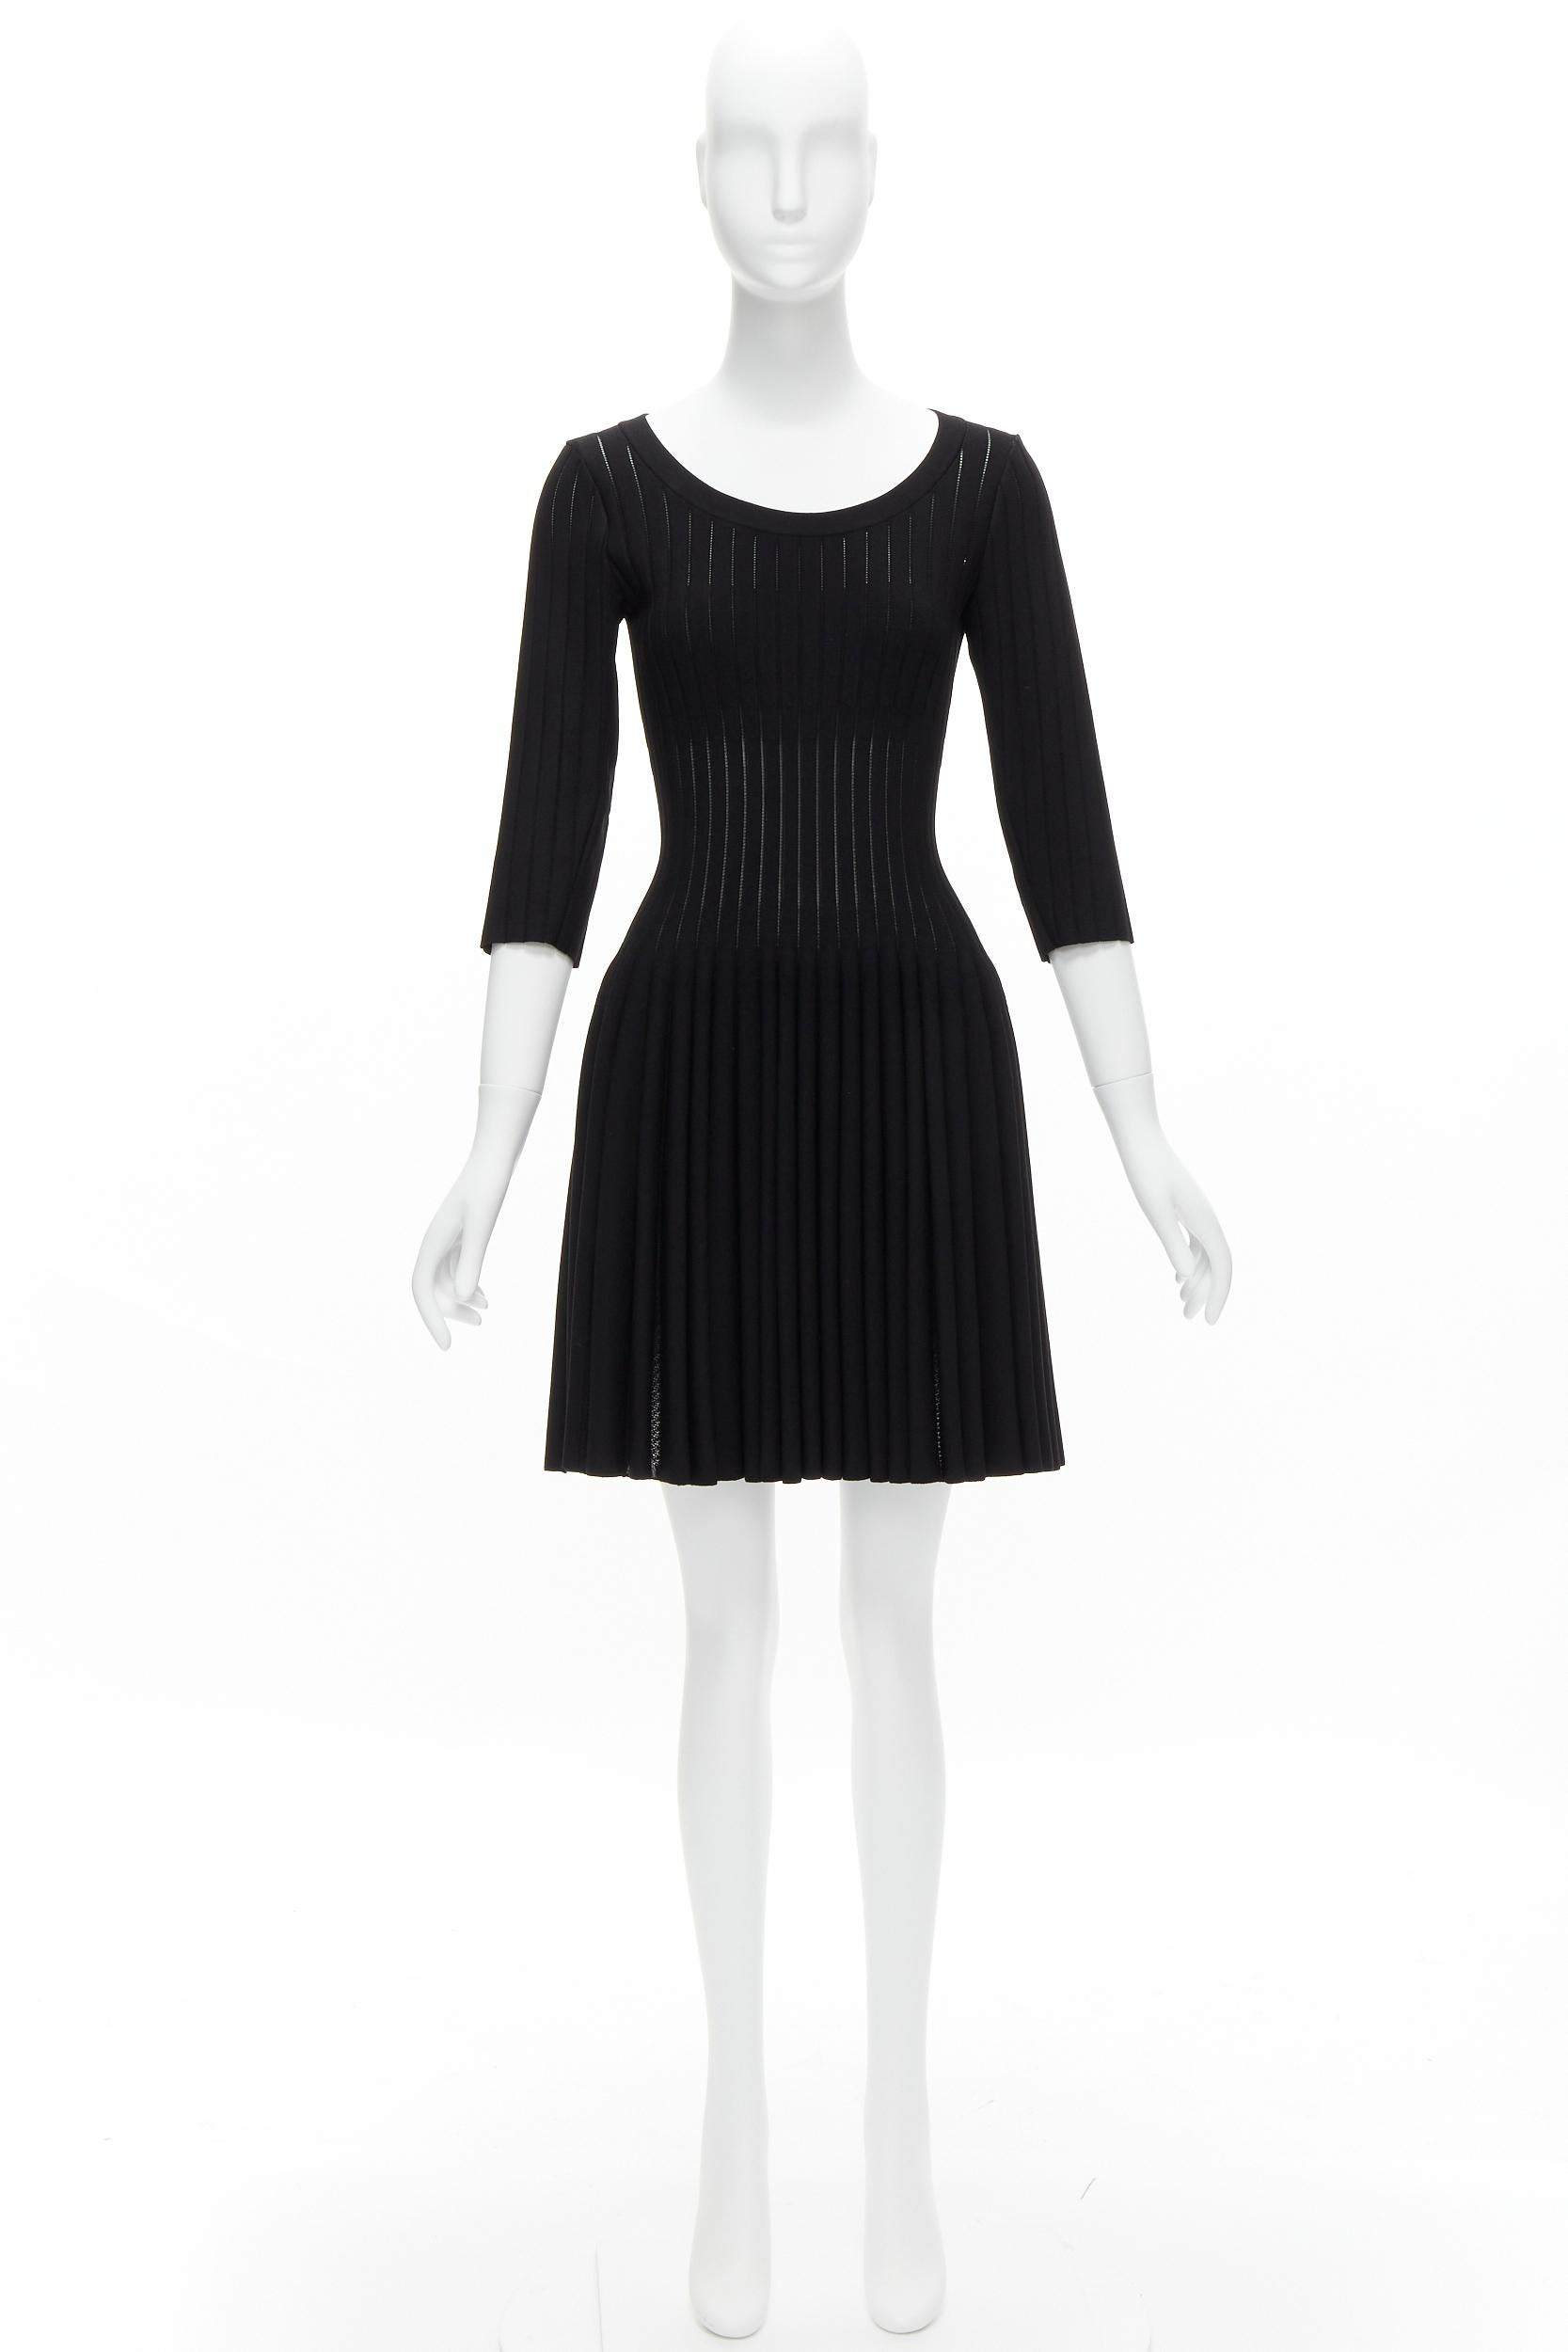 AZZEDINE ALAIA black lattice knit fit flare half classic cocktail dress FR40 M 6